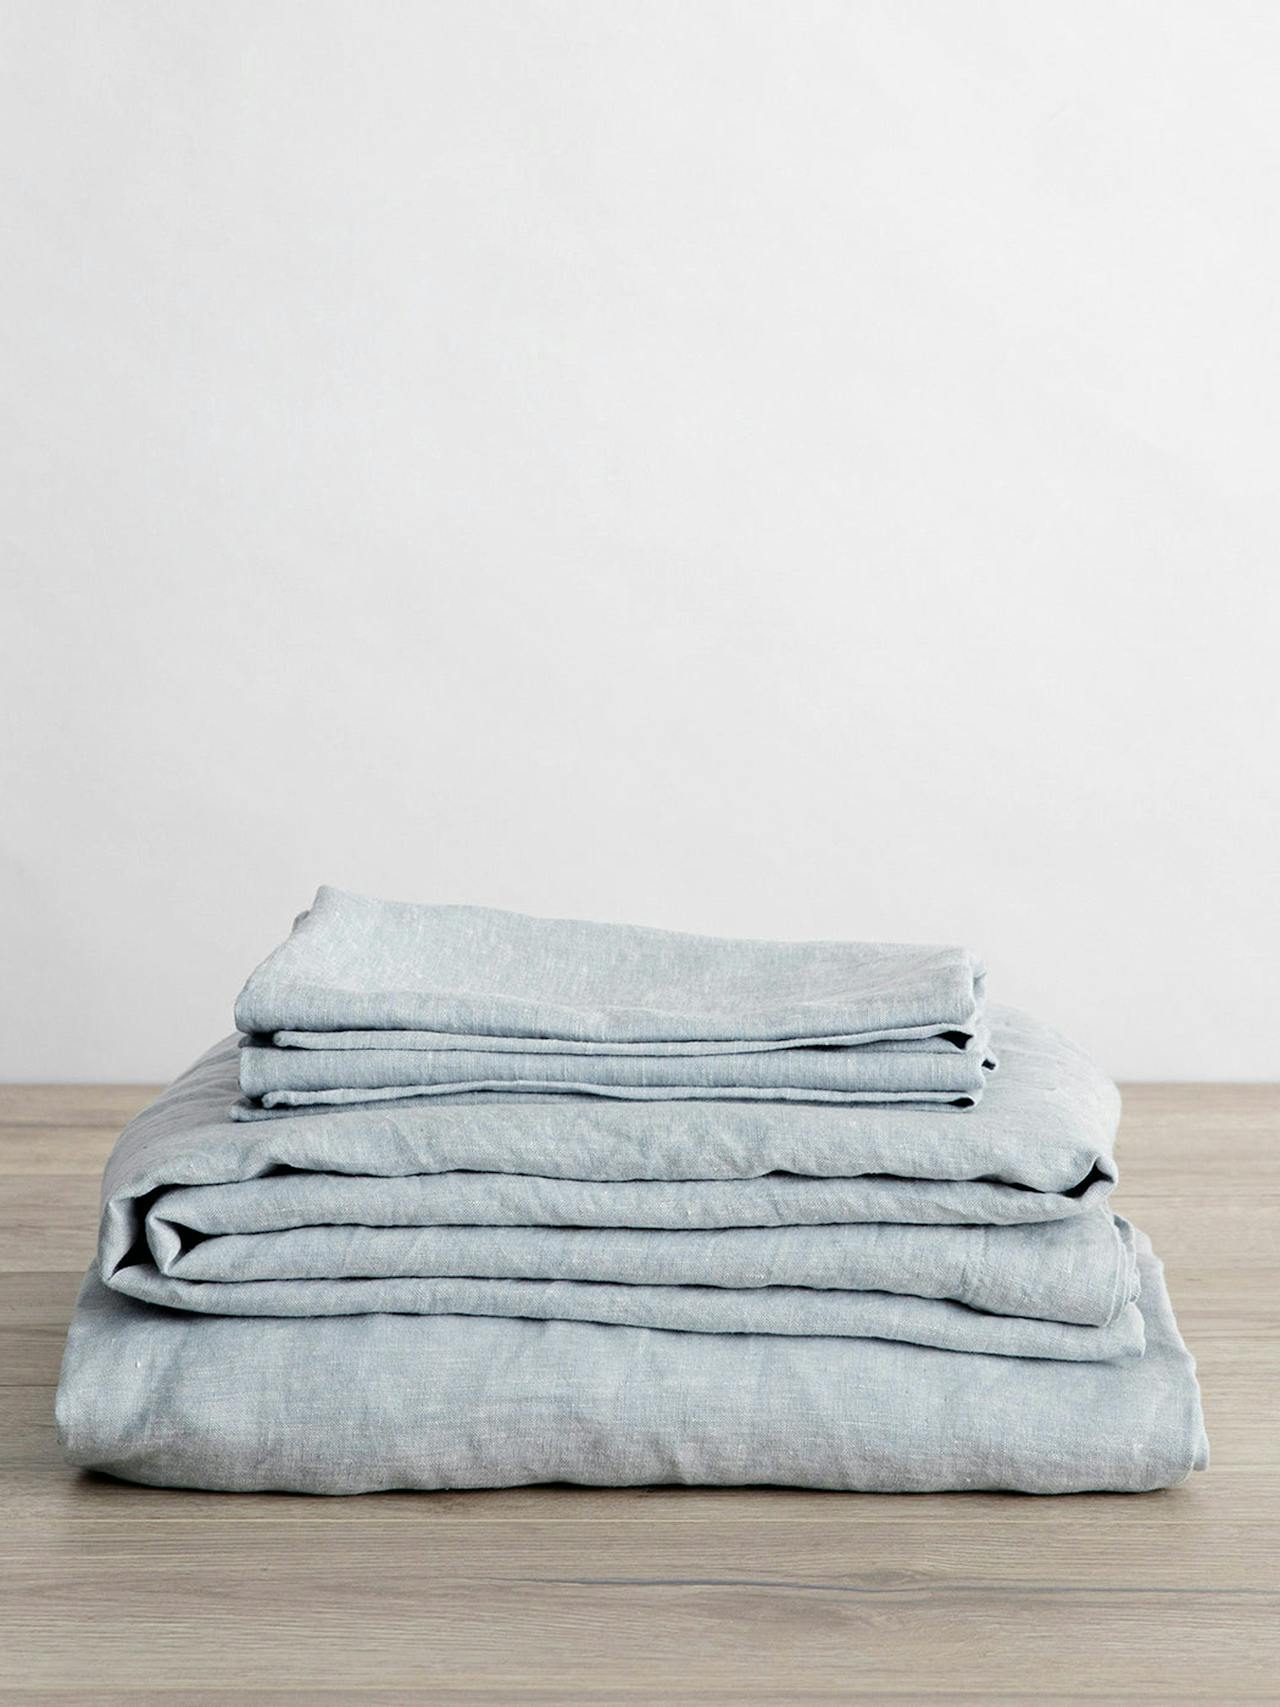 Sky linen sheet set with pillowcases